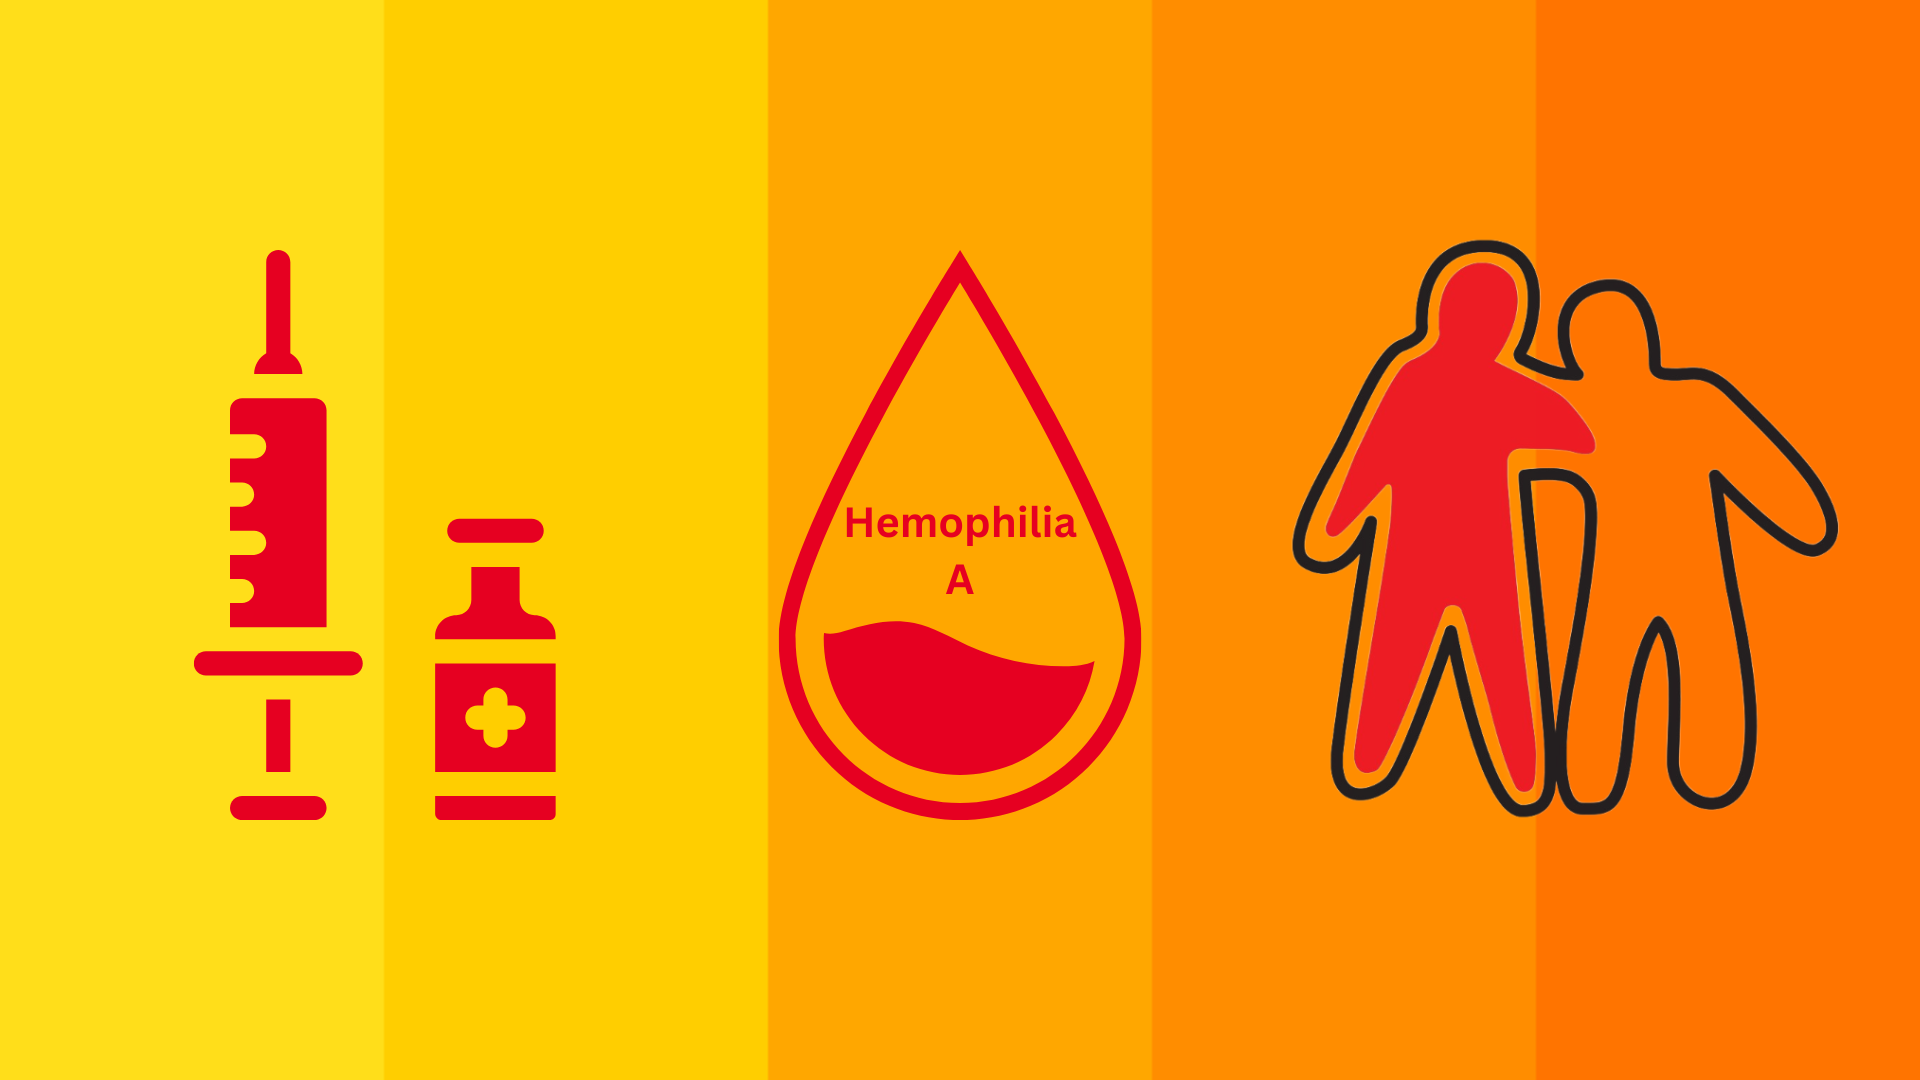 Evropska komisija izdala dovoljenje za promet za novo zdravilo za zdravljenje hemofilije A